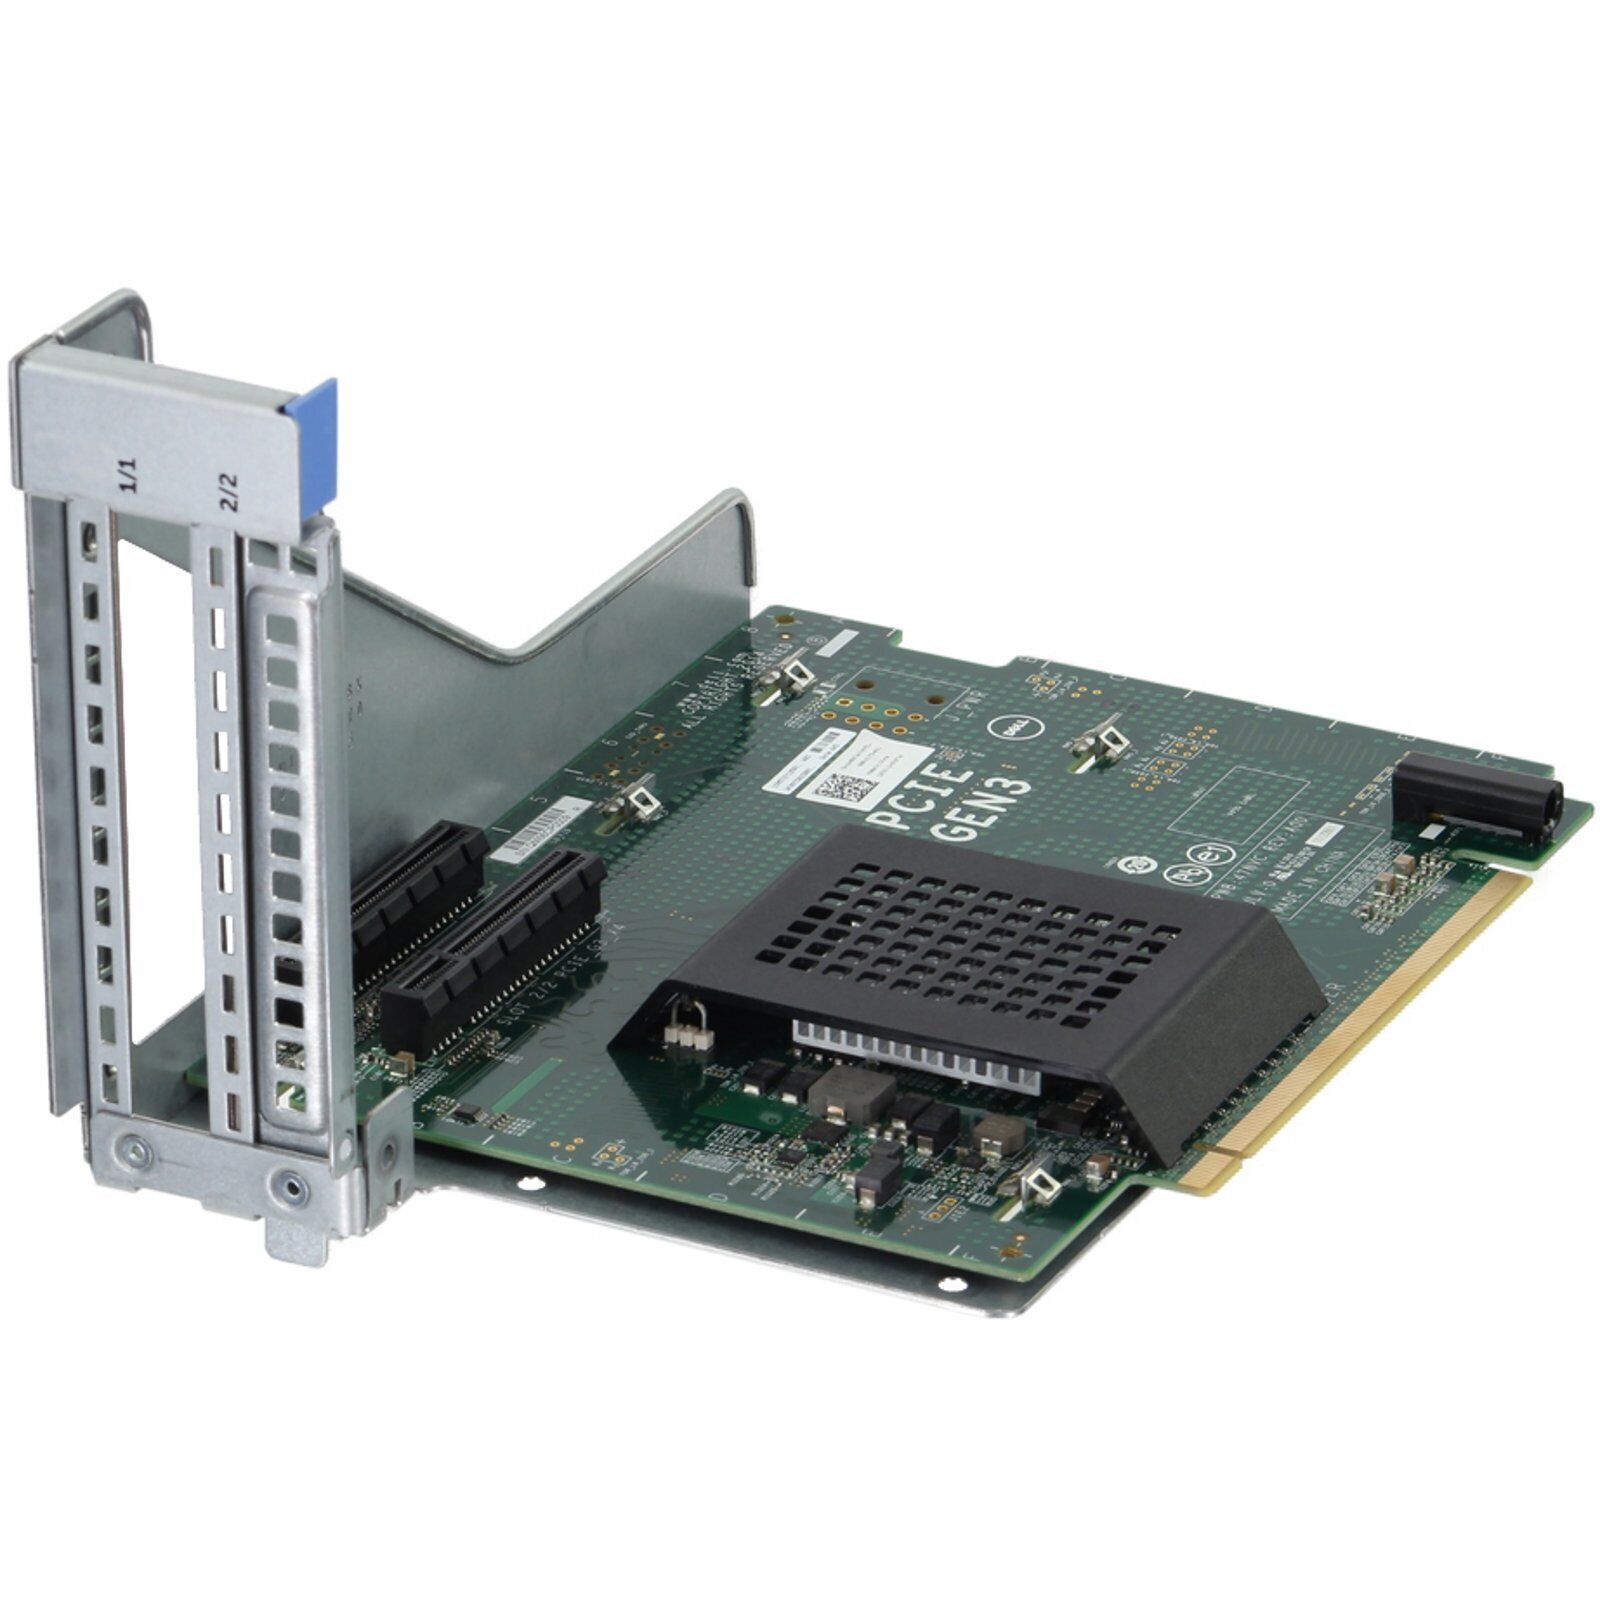 Dell R930 2 x4 Slots Left PCI-e Riser (HR9TW-OSTK)